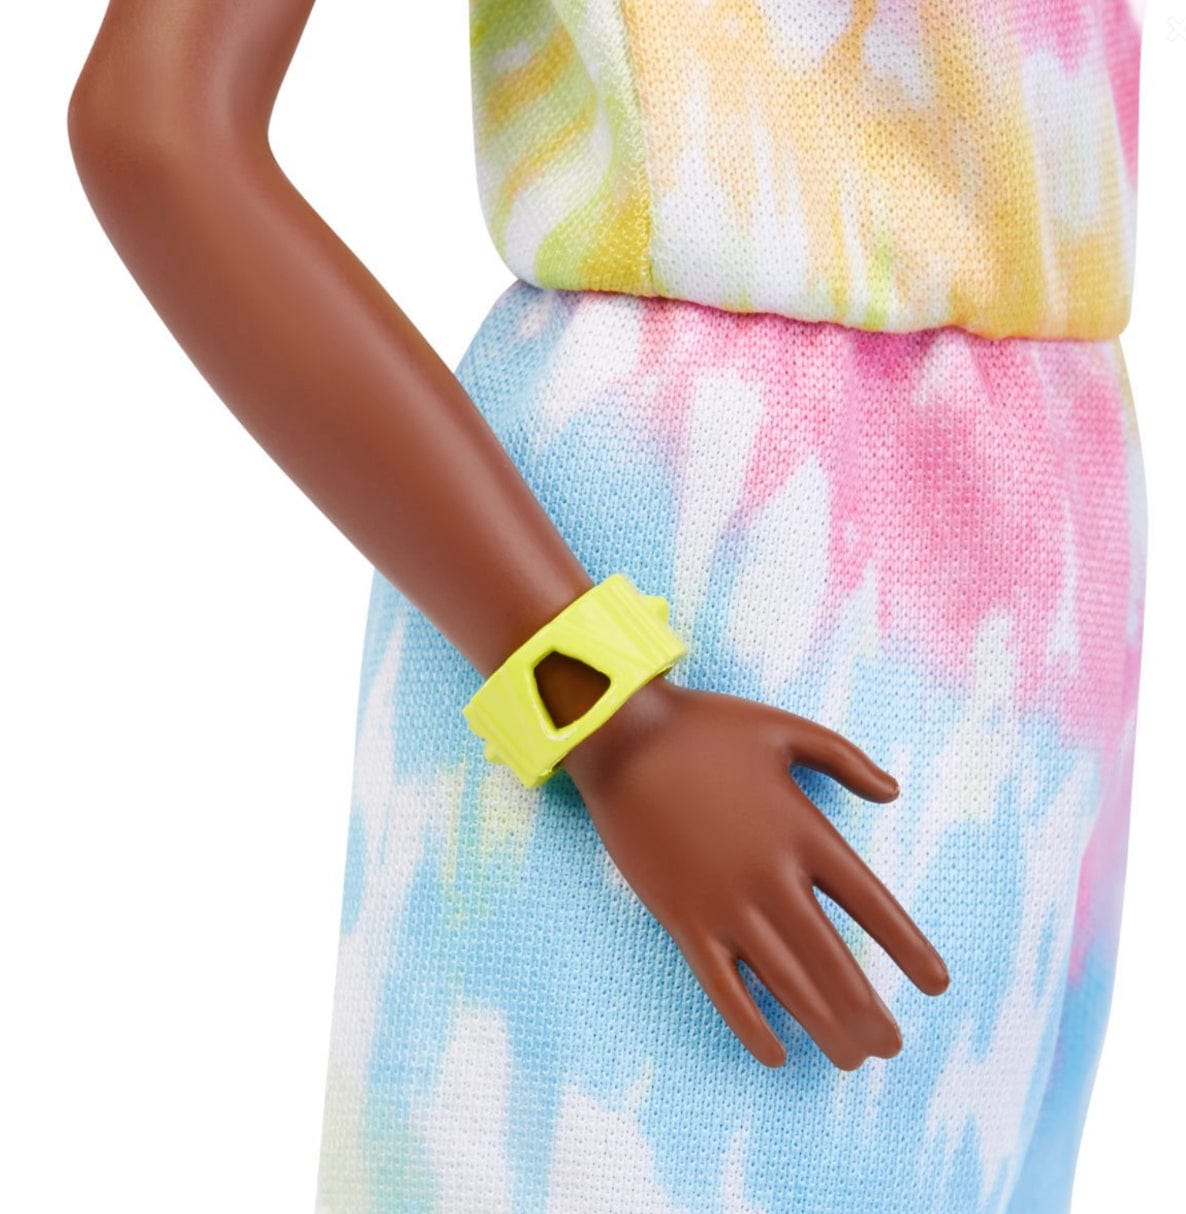 Barbie Fashionista Doll #180 with Multi-Color Tie-Dye Romper